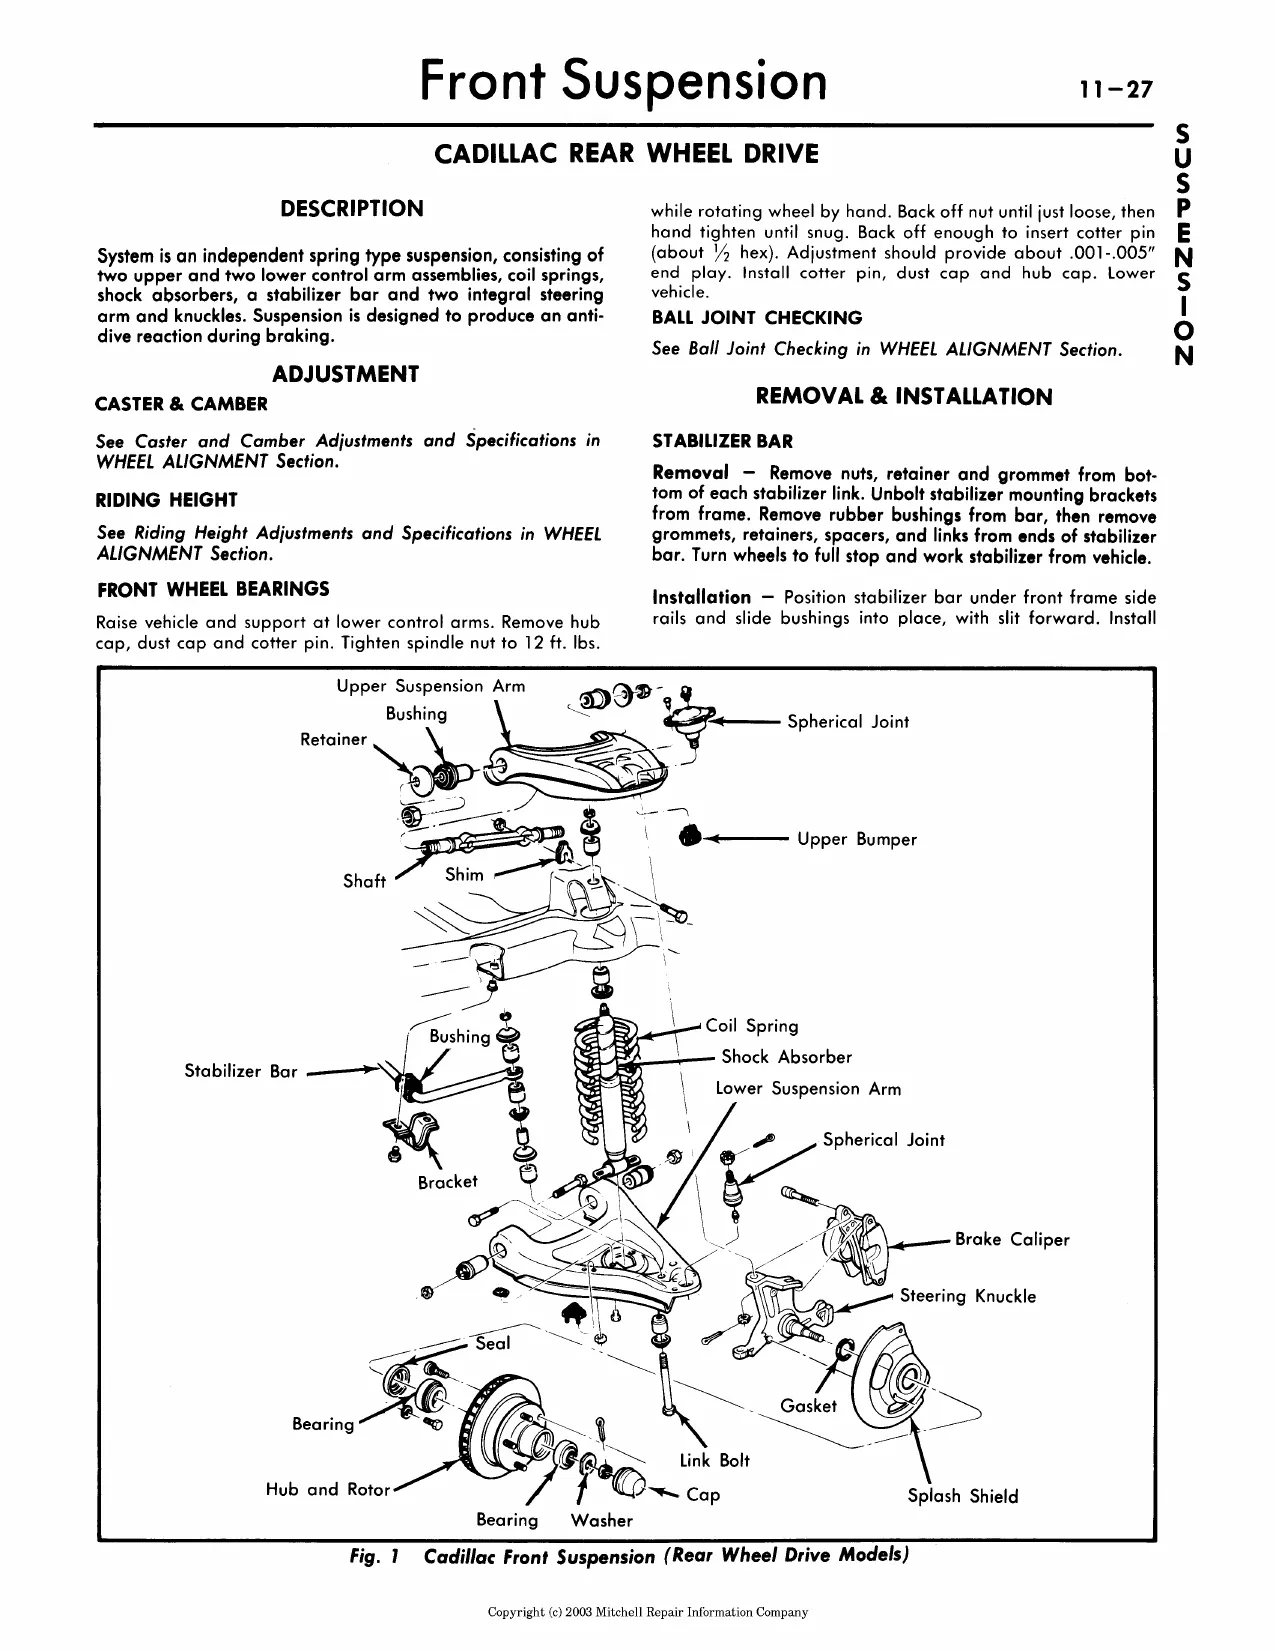 1970-1993 Cadillac repair manual